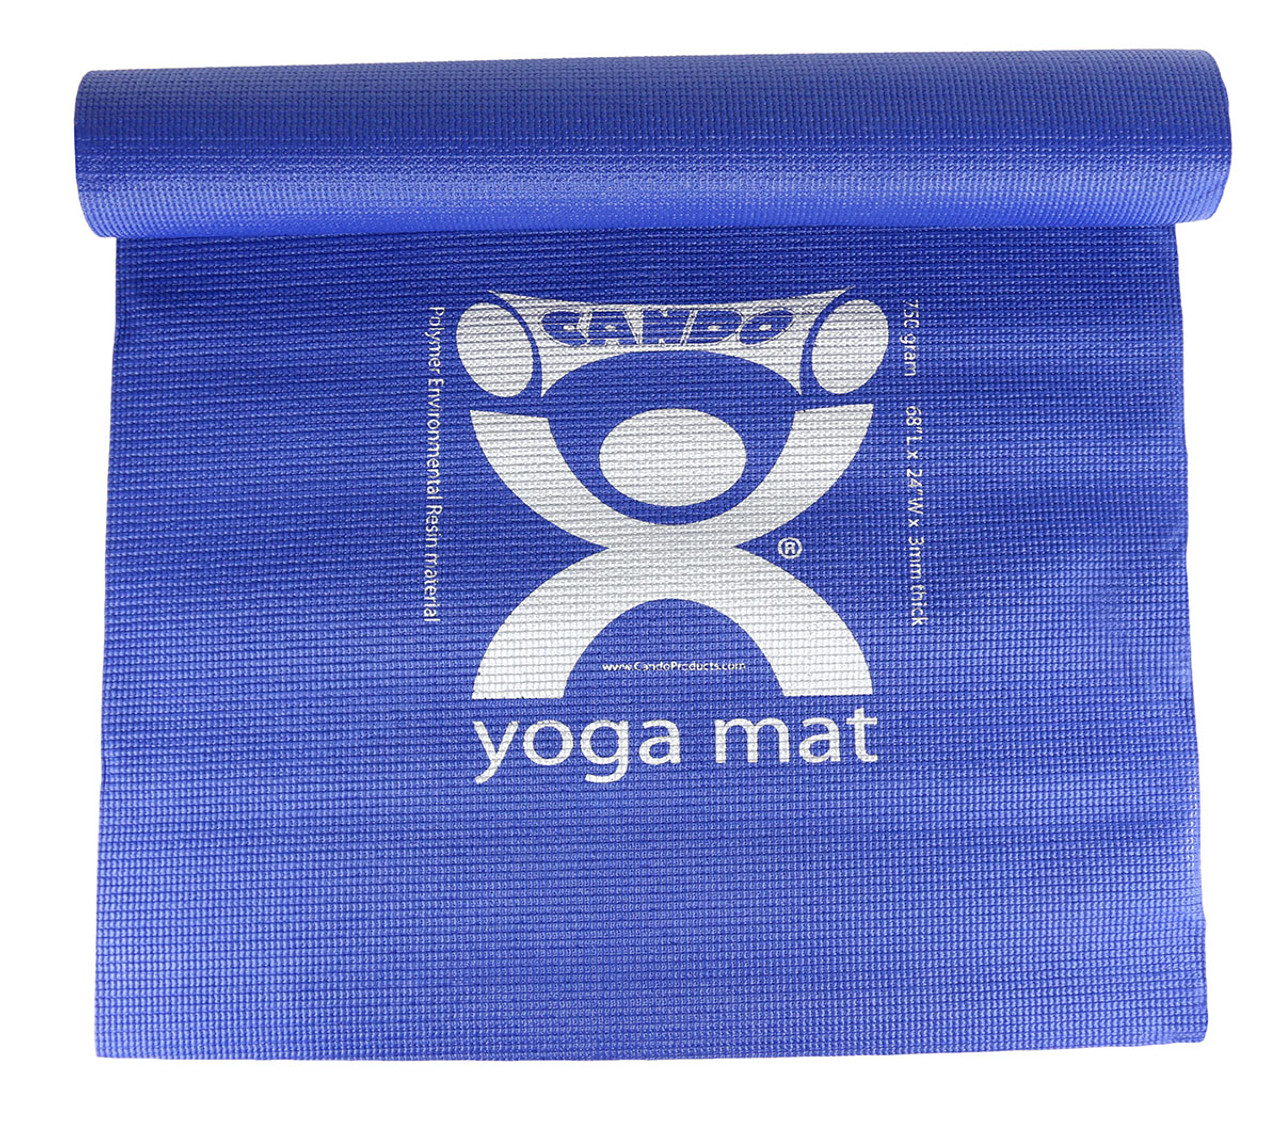 CanDo¨ Exercise Mat - yoga mat - Blue, 68" x 24" x 0.12", case of 10